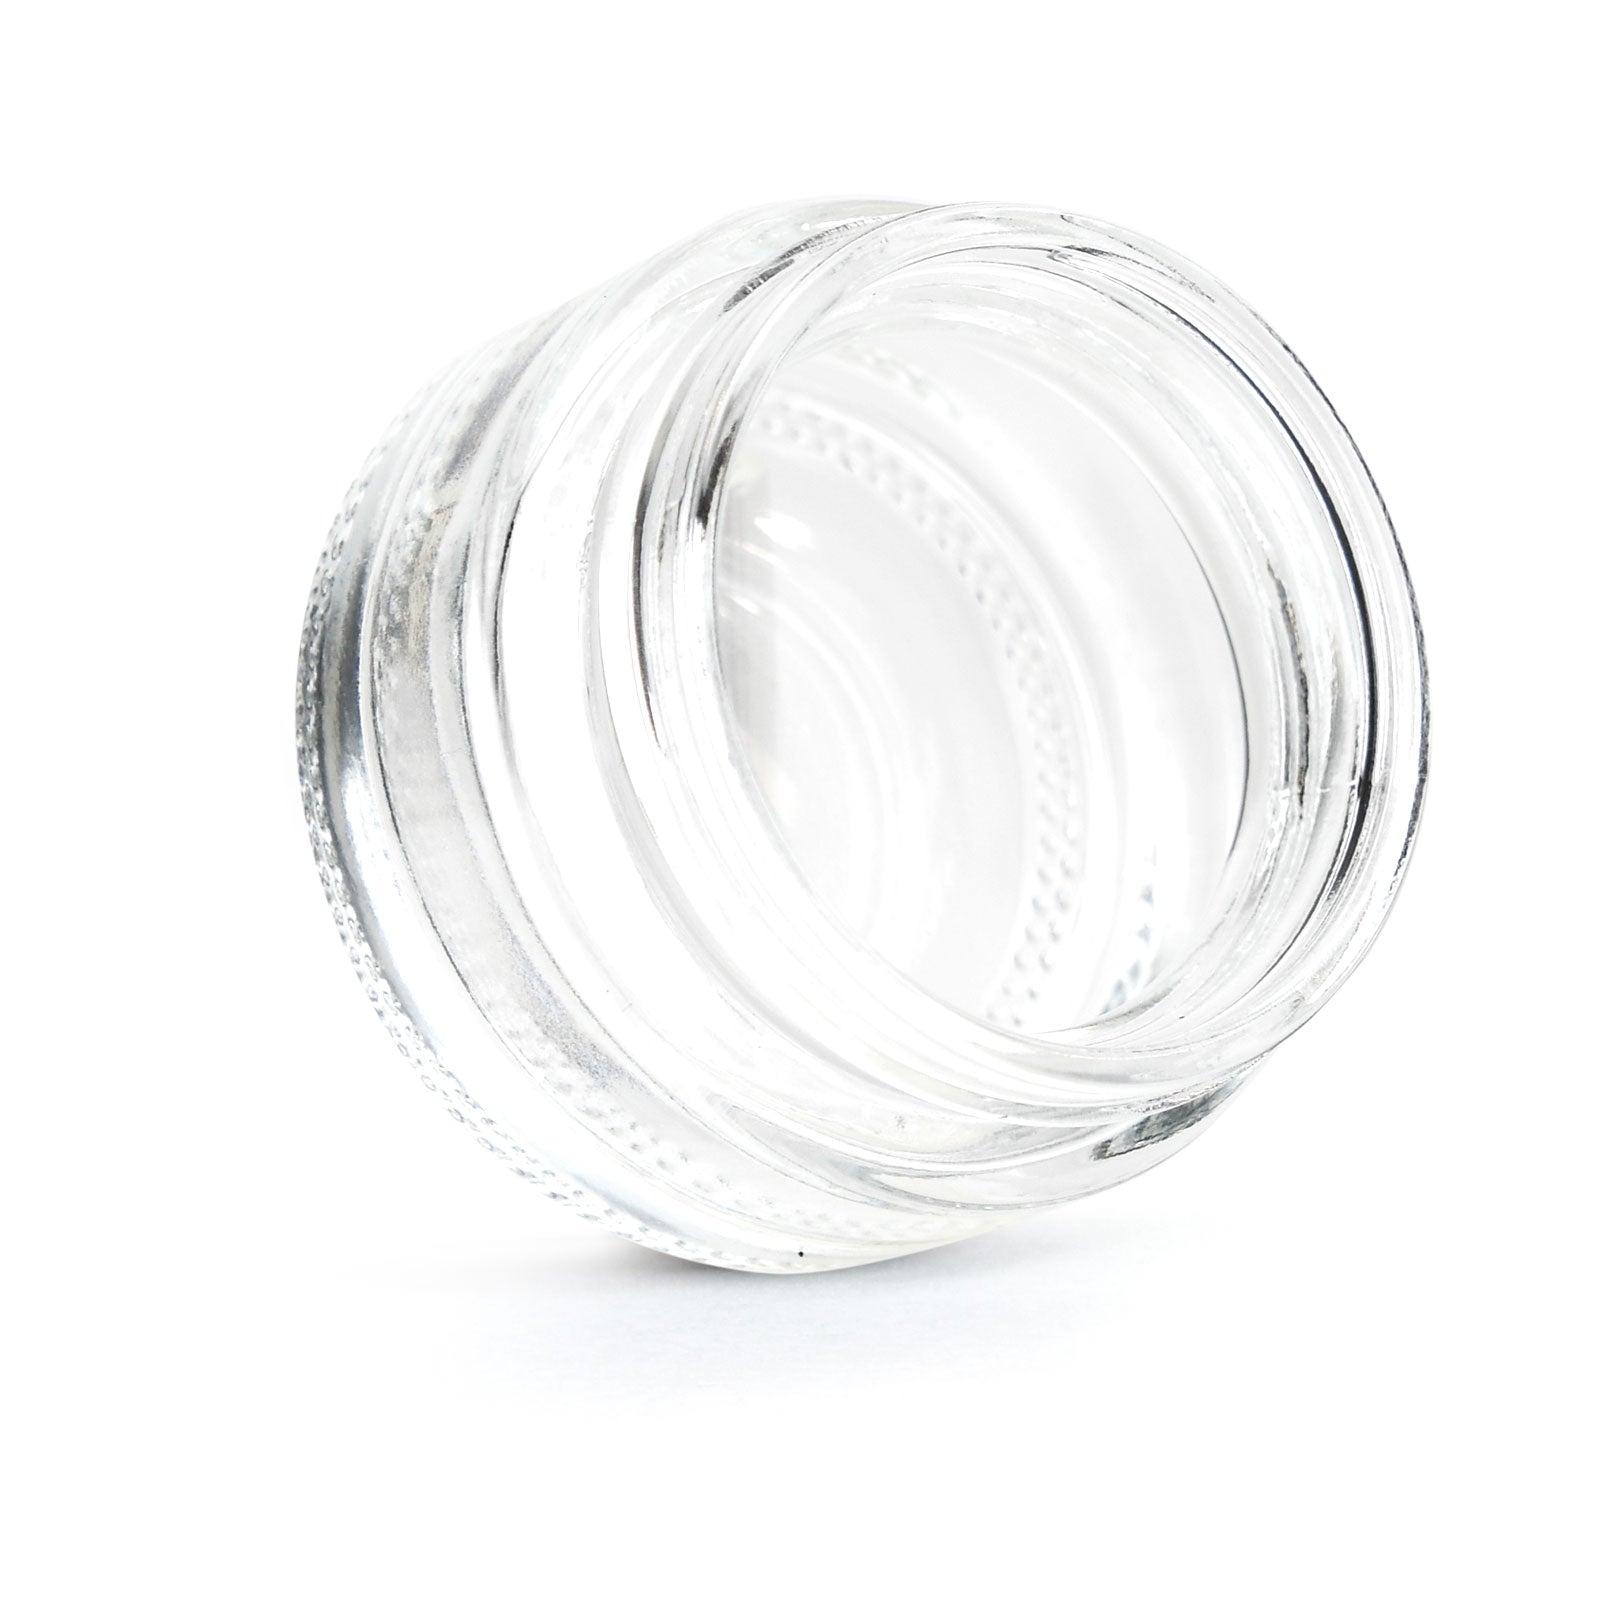 1oz Child Resistant Glass Jars With Black Caps - 1-2 Grams - 20 Count